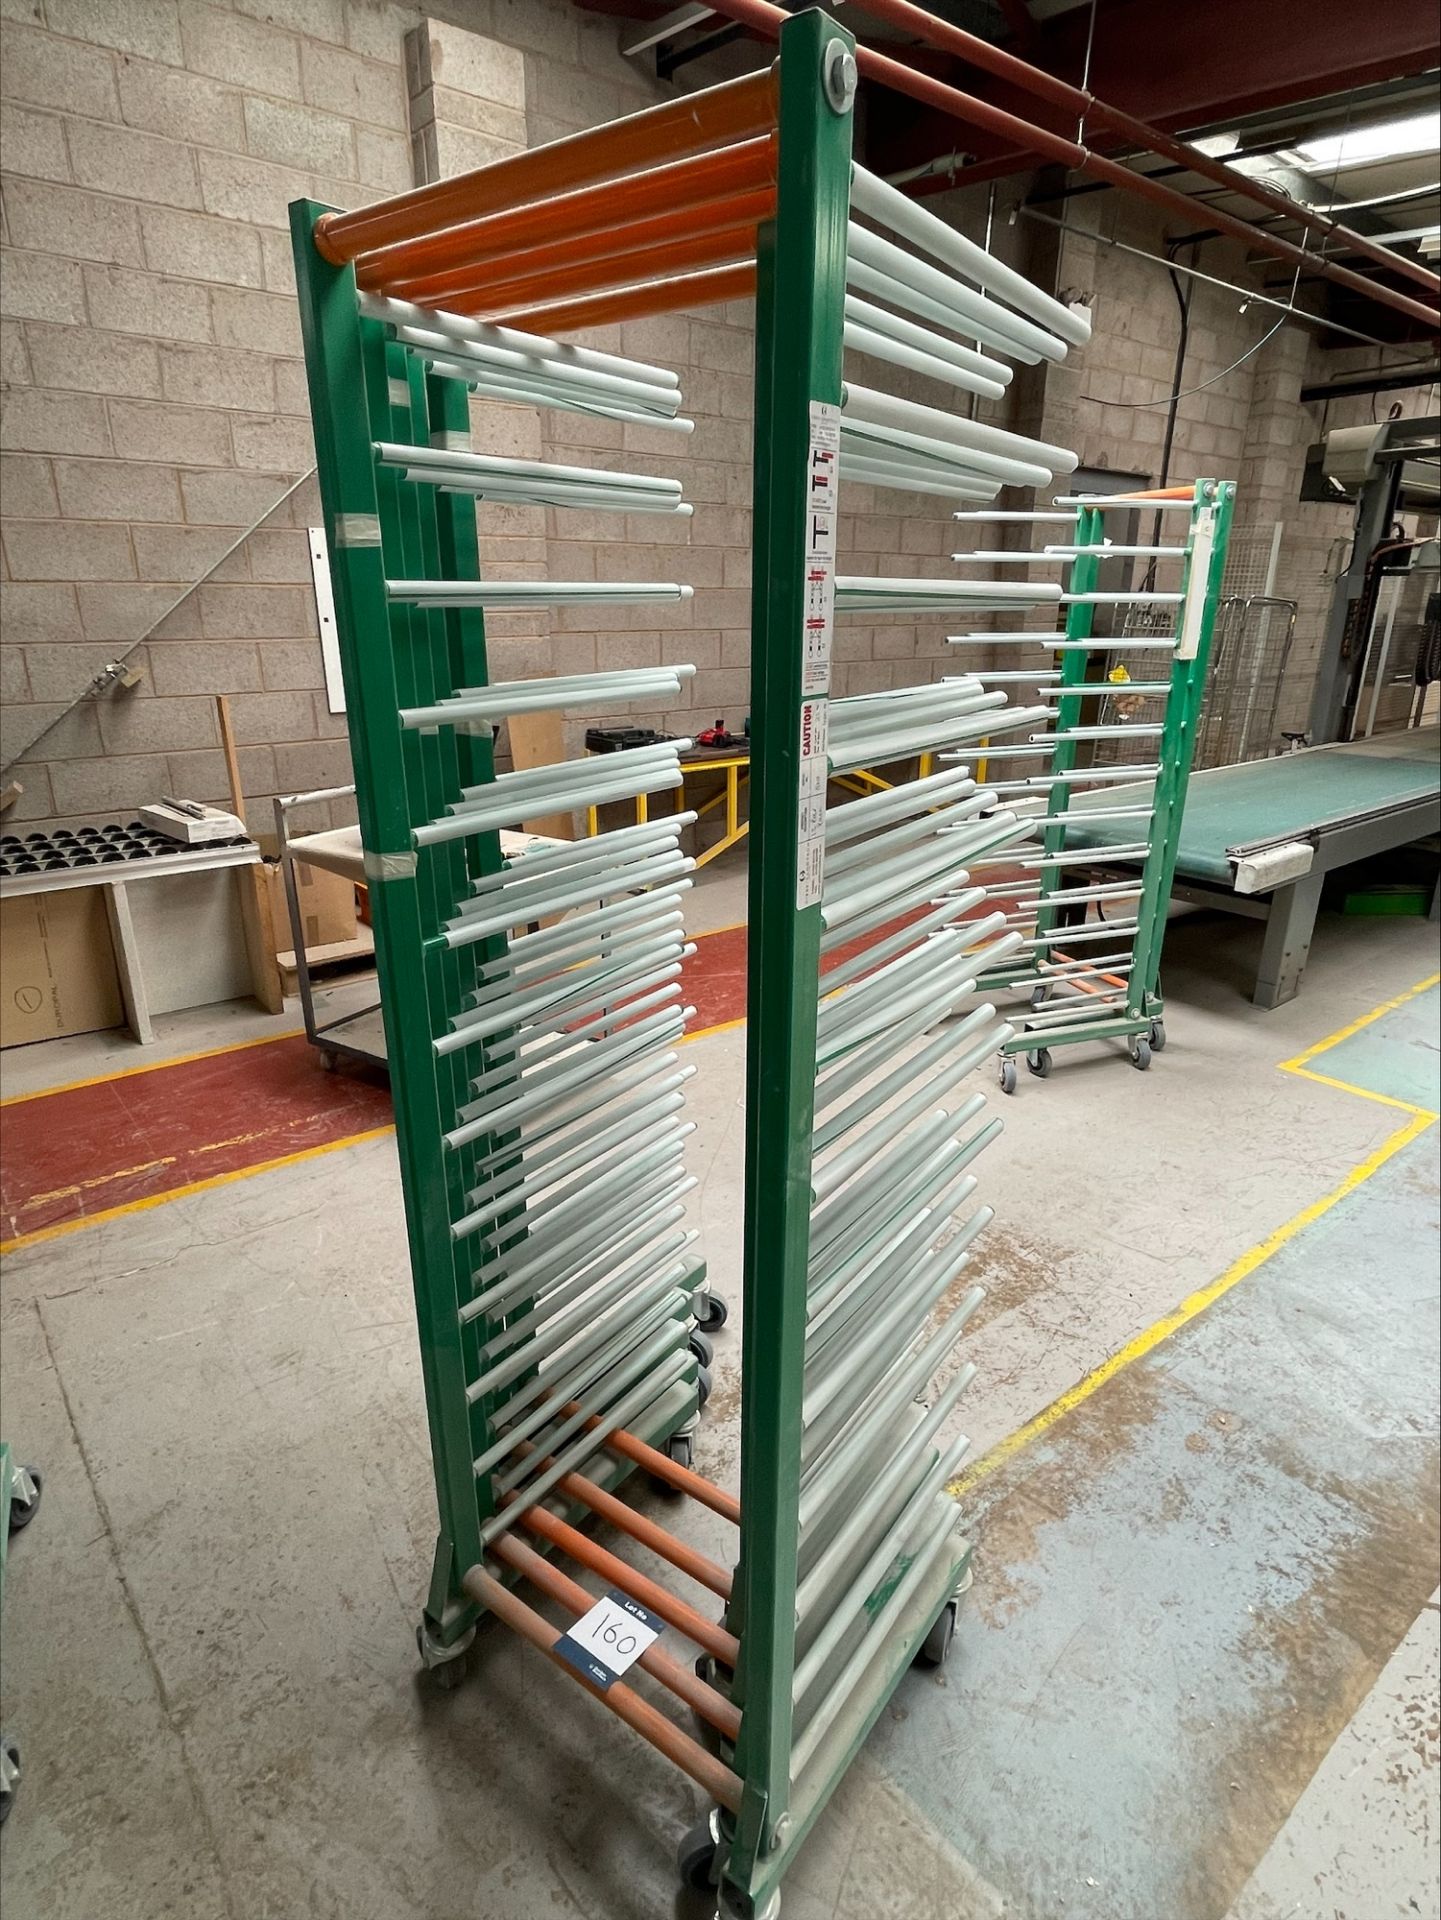 5x Gibbs Sandtech 13 bar standard spray drying racks, 13 bars per upright, max. load per pair of - Image 3 of 3